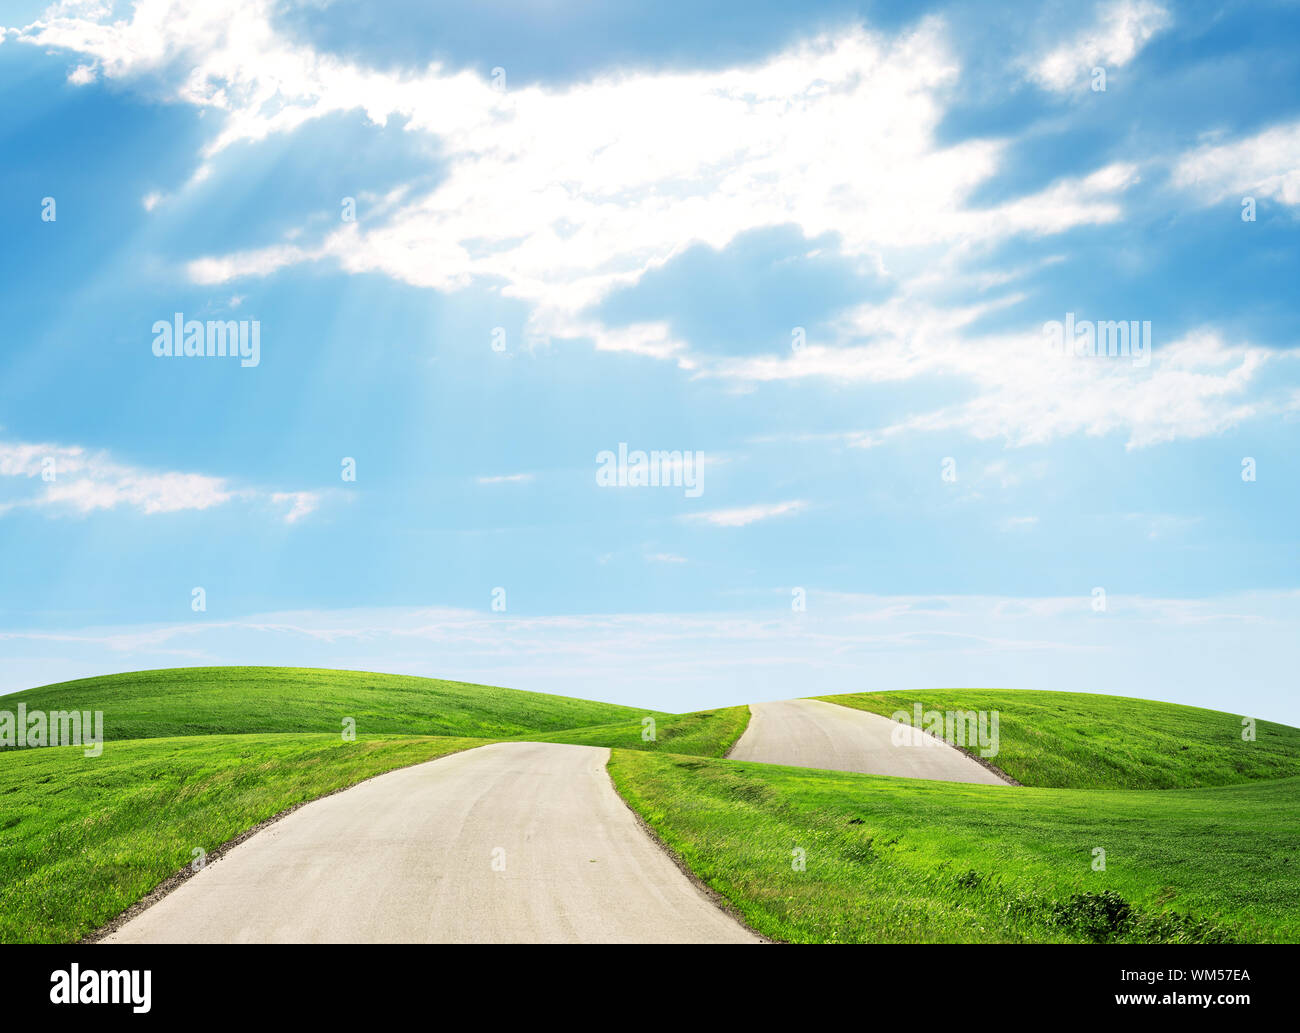 Road running through green hills towards horison Stock Photo